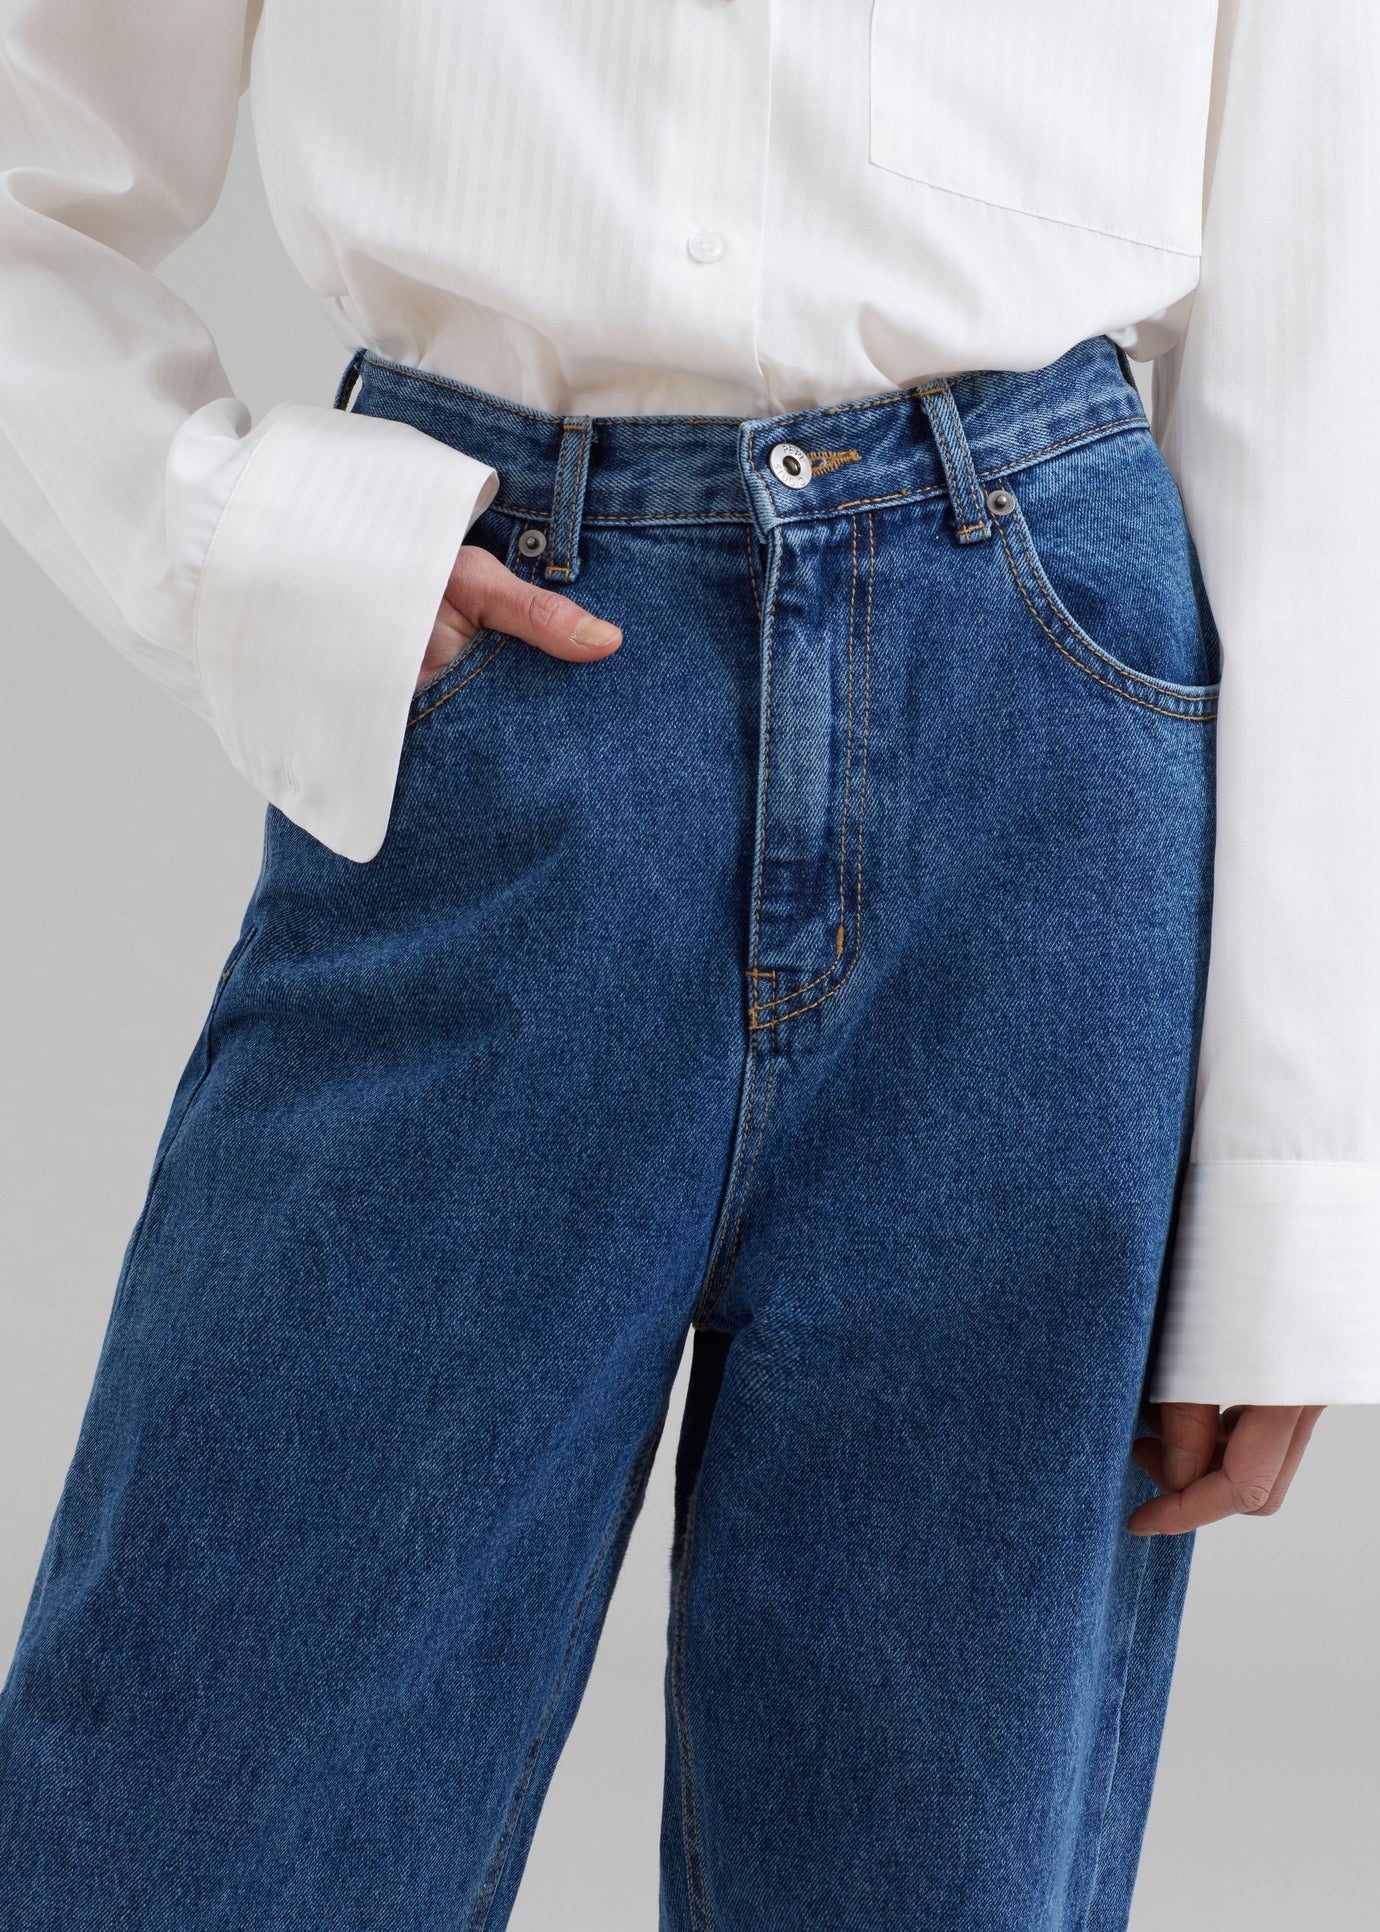 Alabama Jeans - Medium Wash - 1